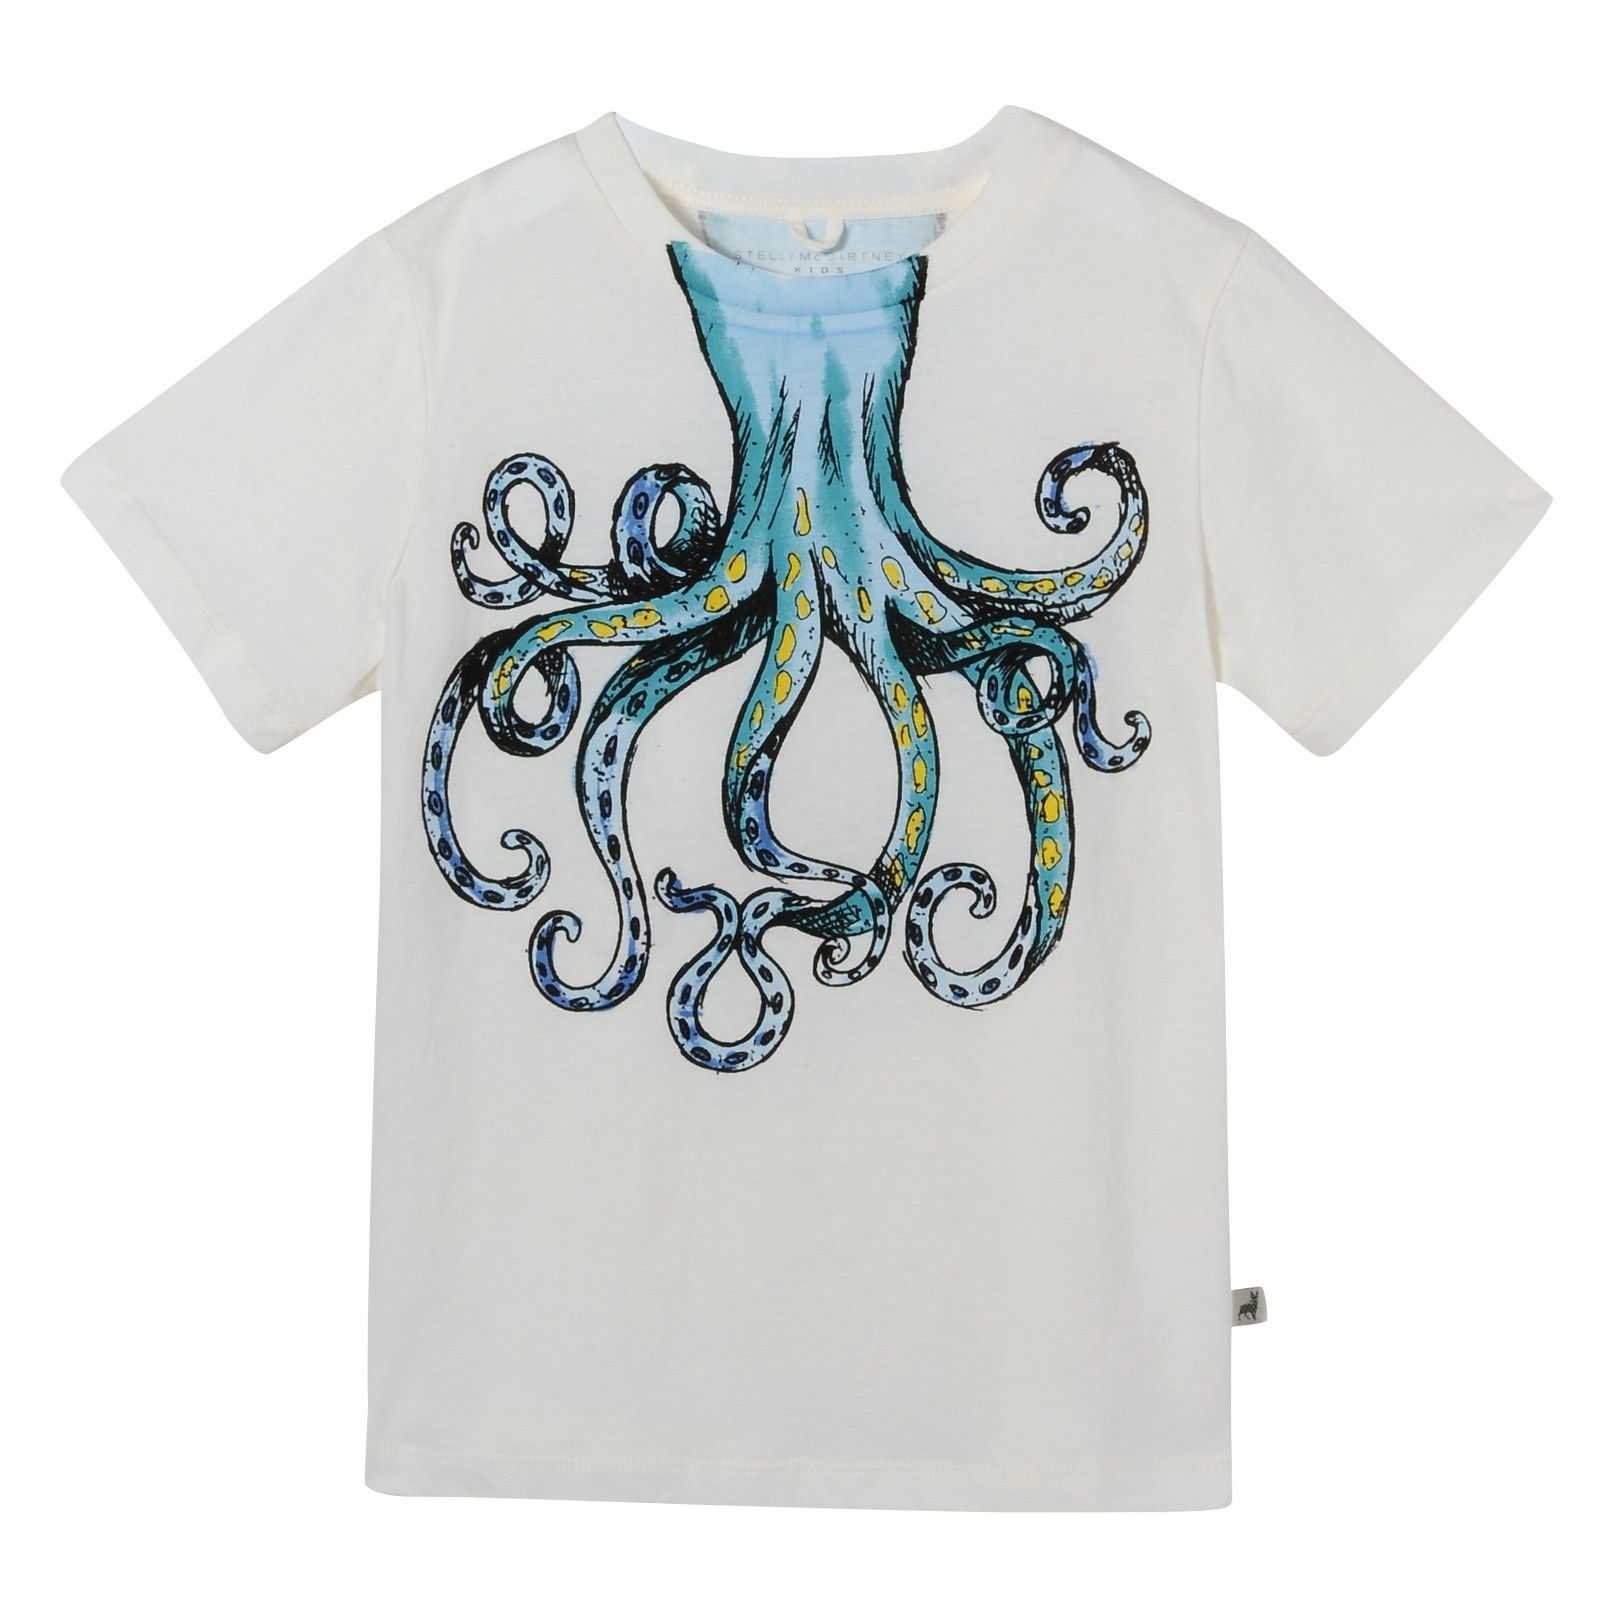 Boys White Cotton T-Shirt With Colorful Octopus Print - CÉMAROSE | Children's Fashion Store - 1